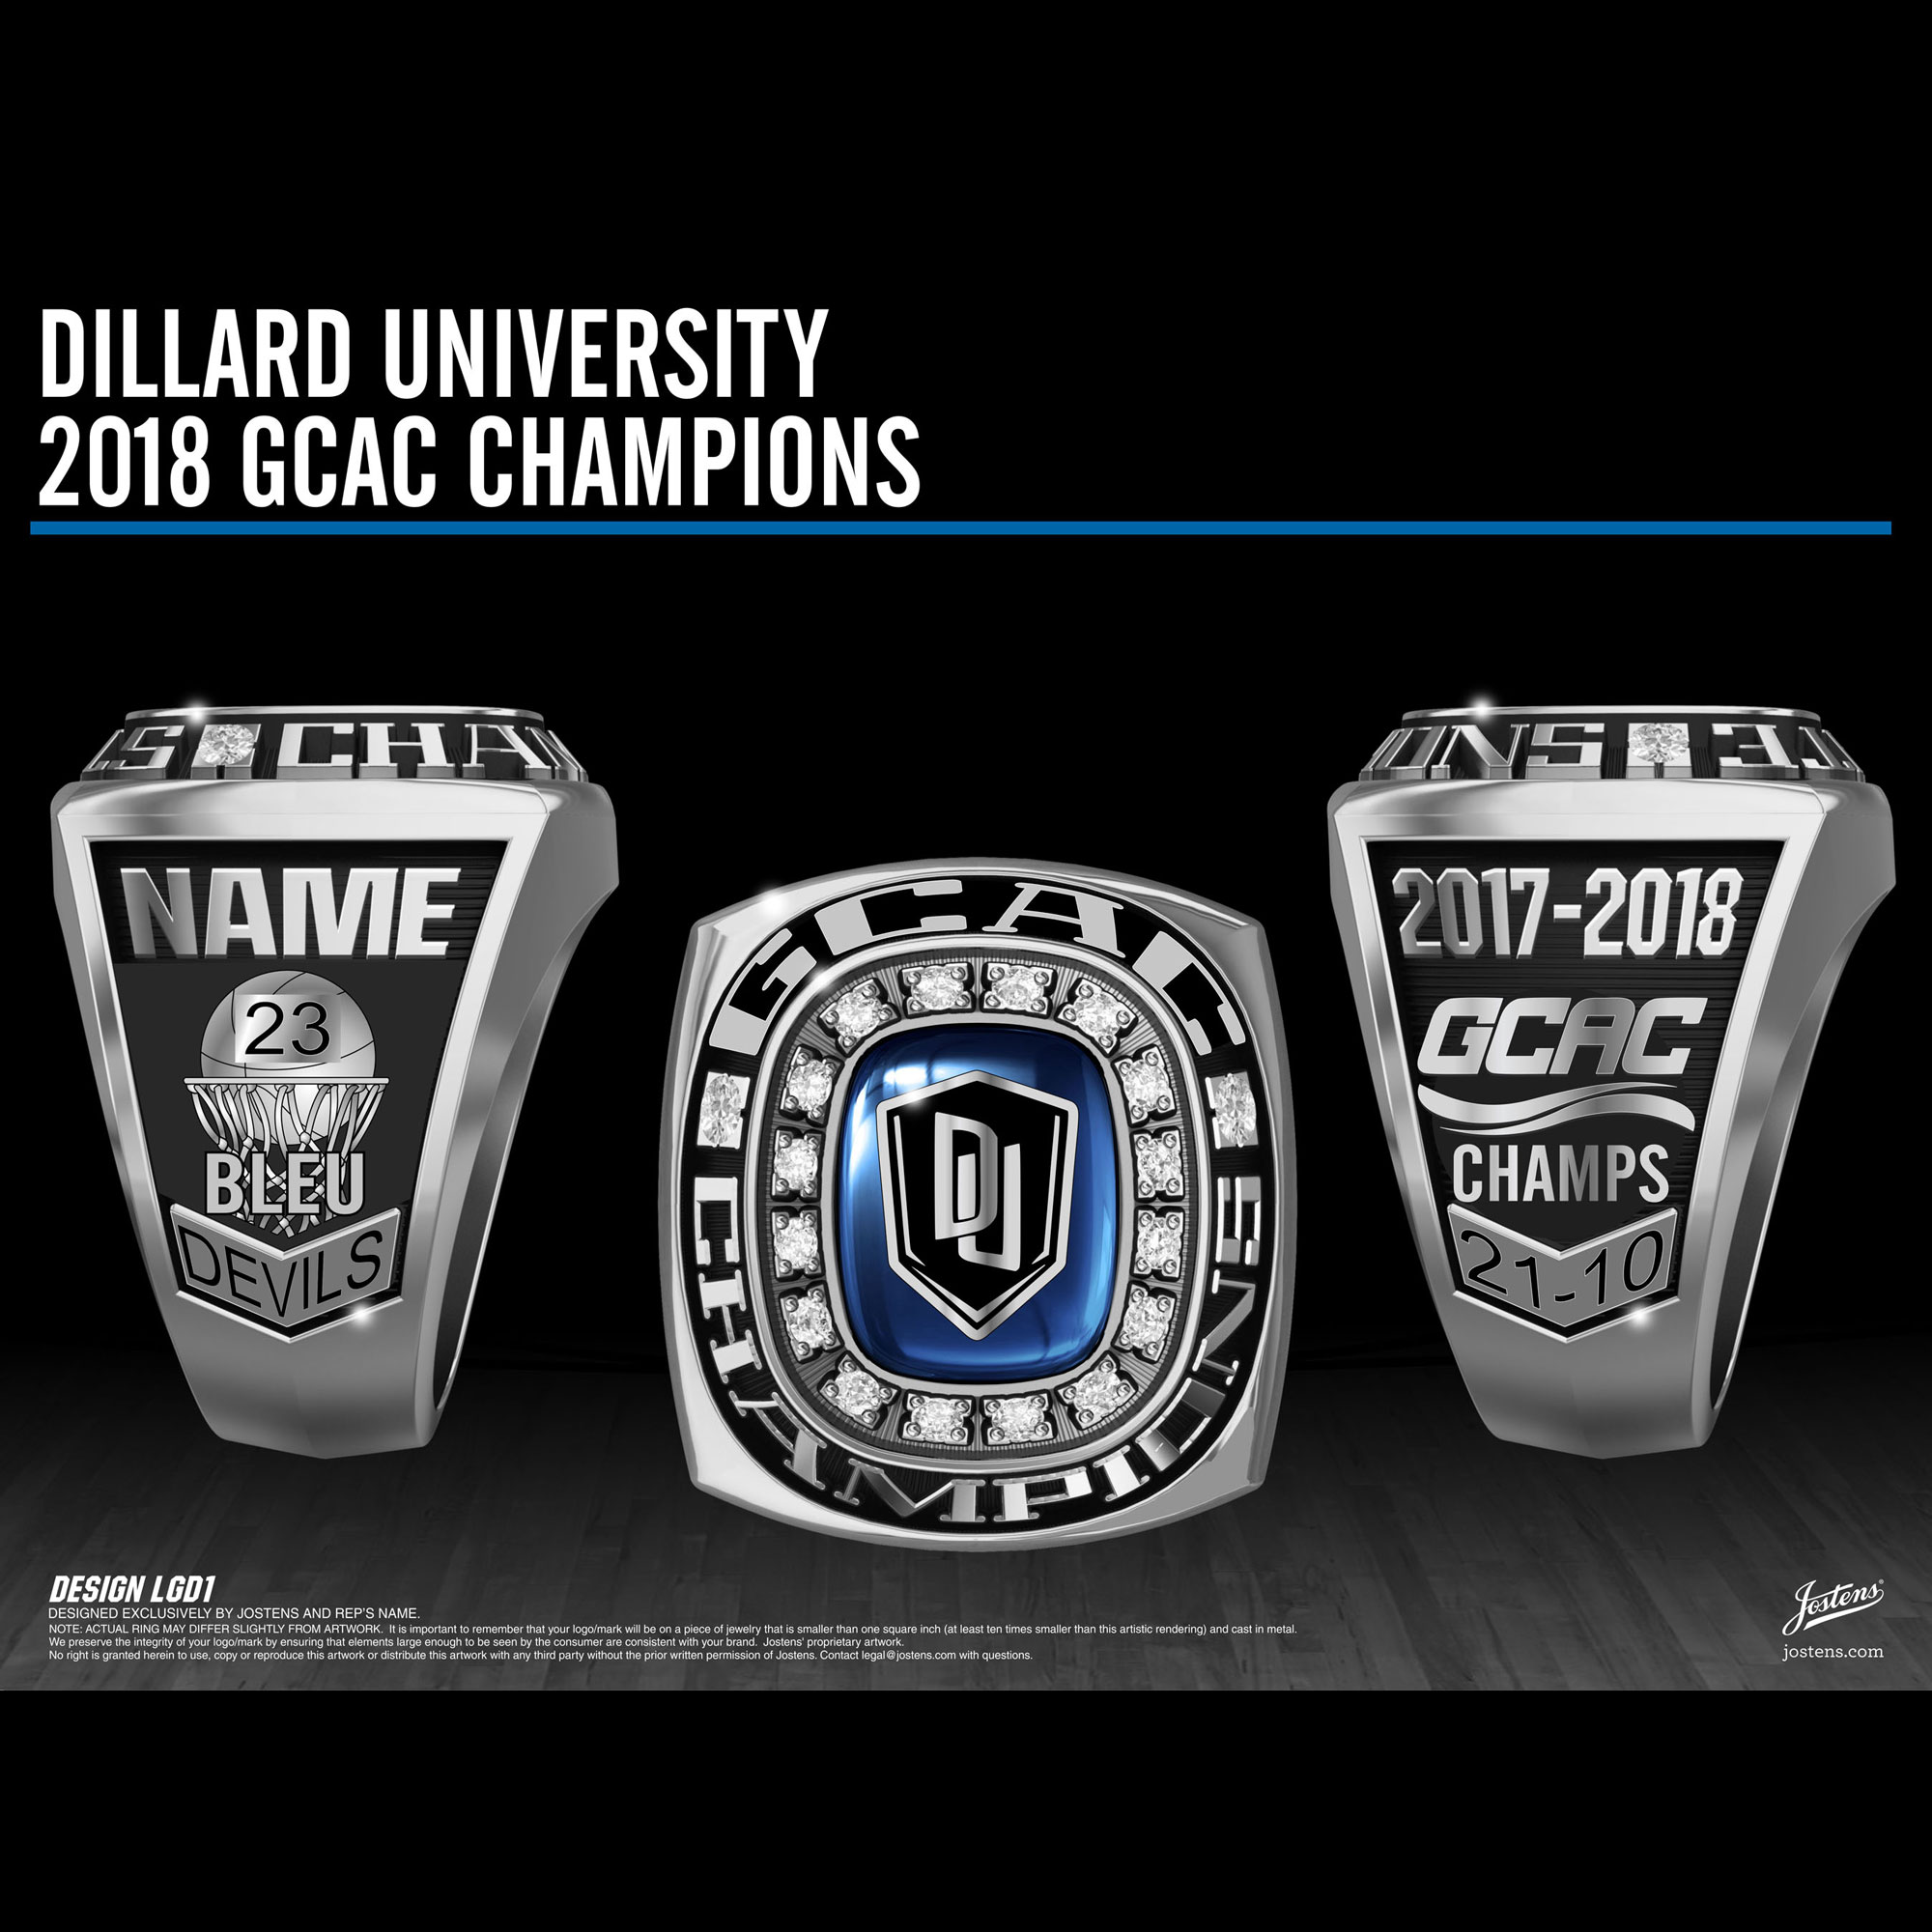 Dillard University Men's Basketball 2018 GCAC Championship Ring